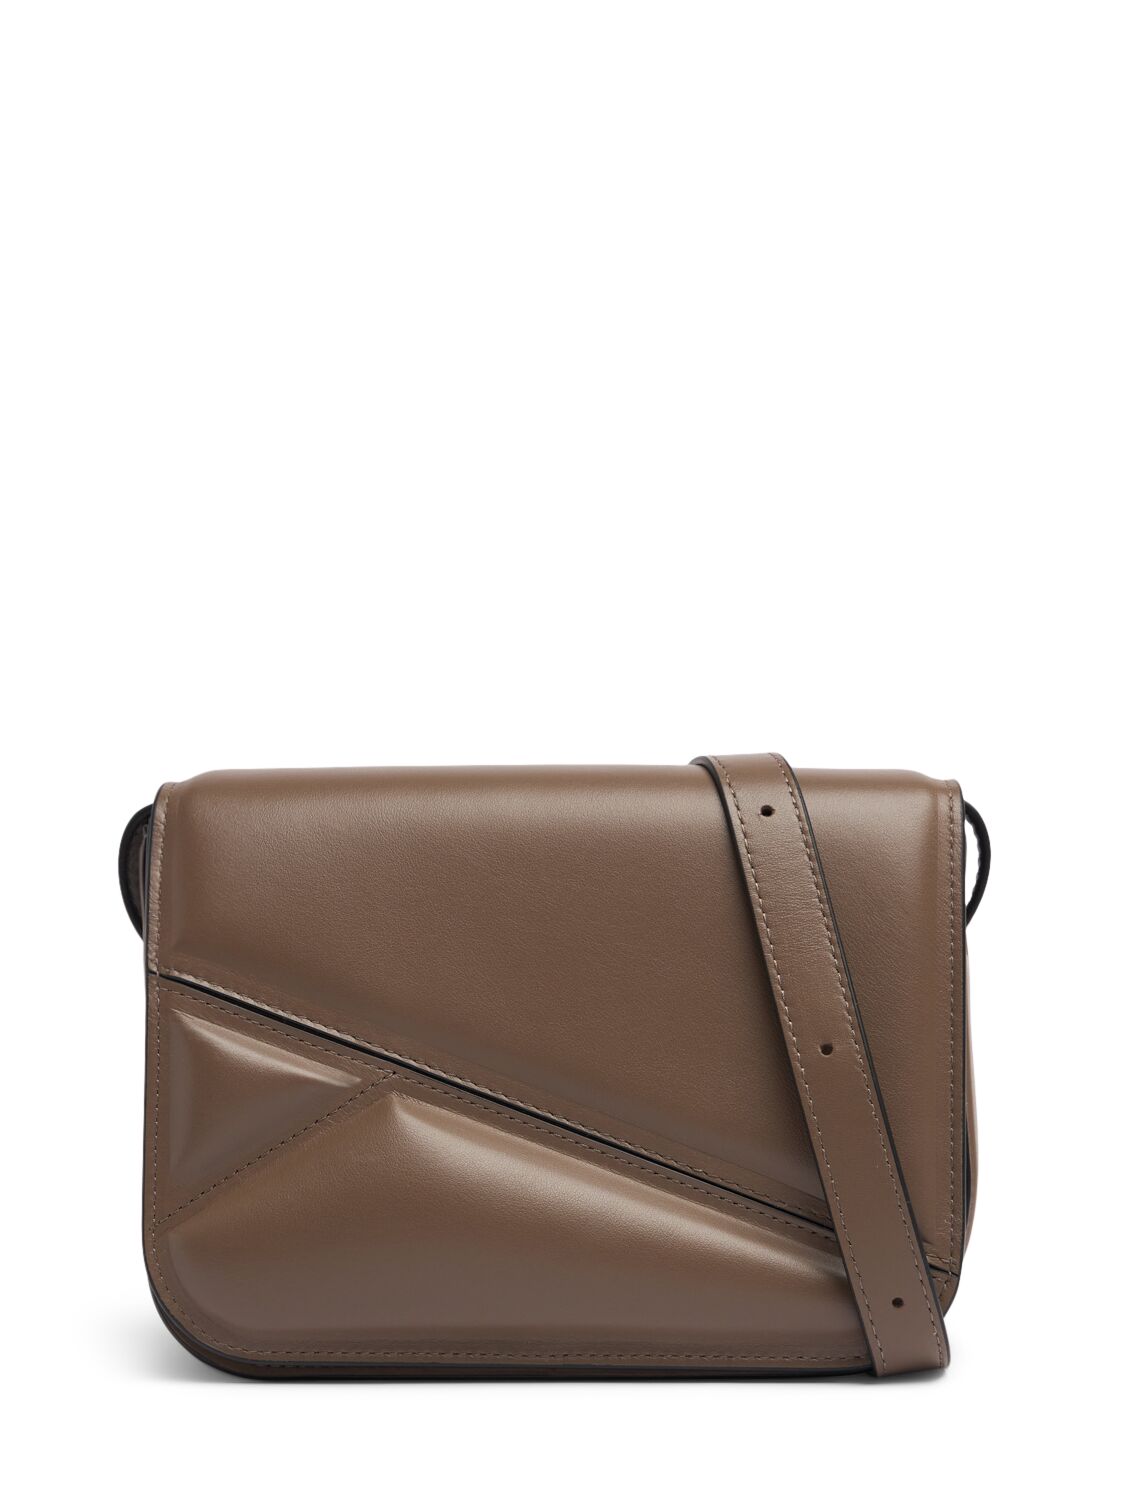 Medium Oscar Trunk Leather Shoulder Bag